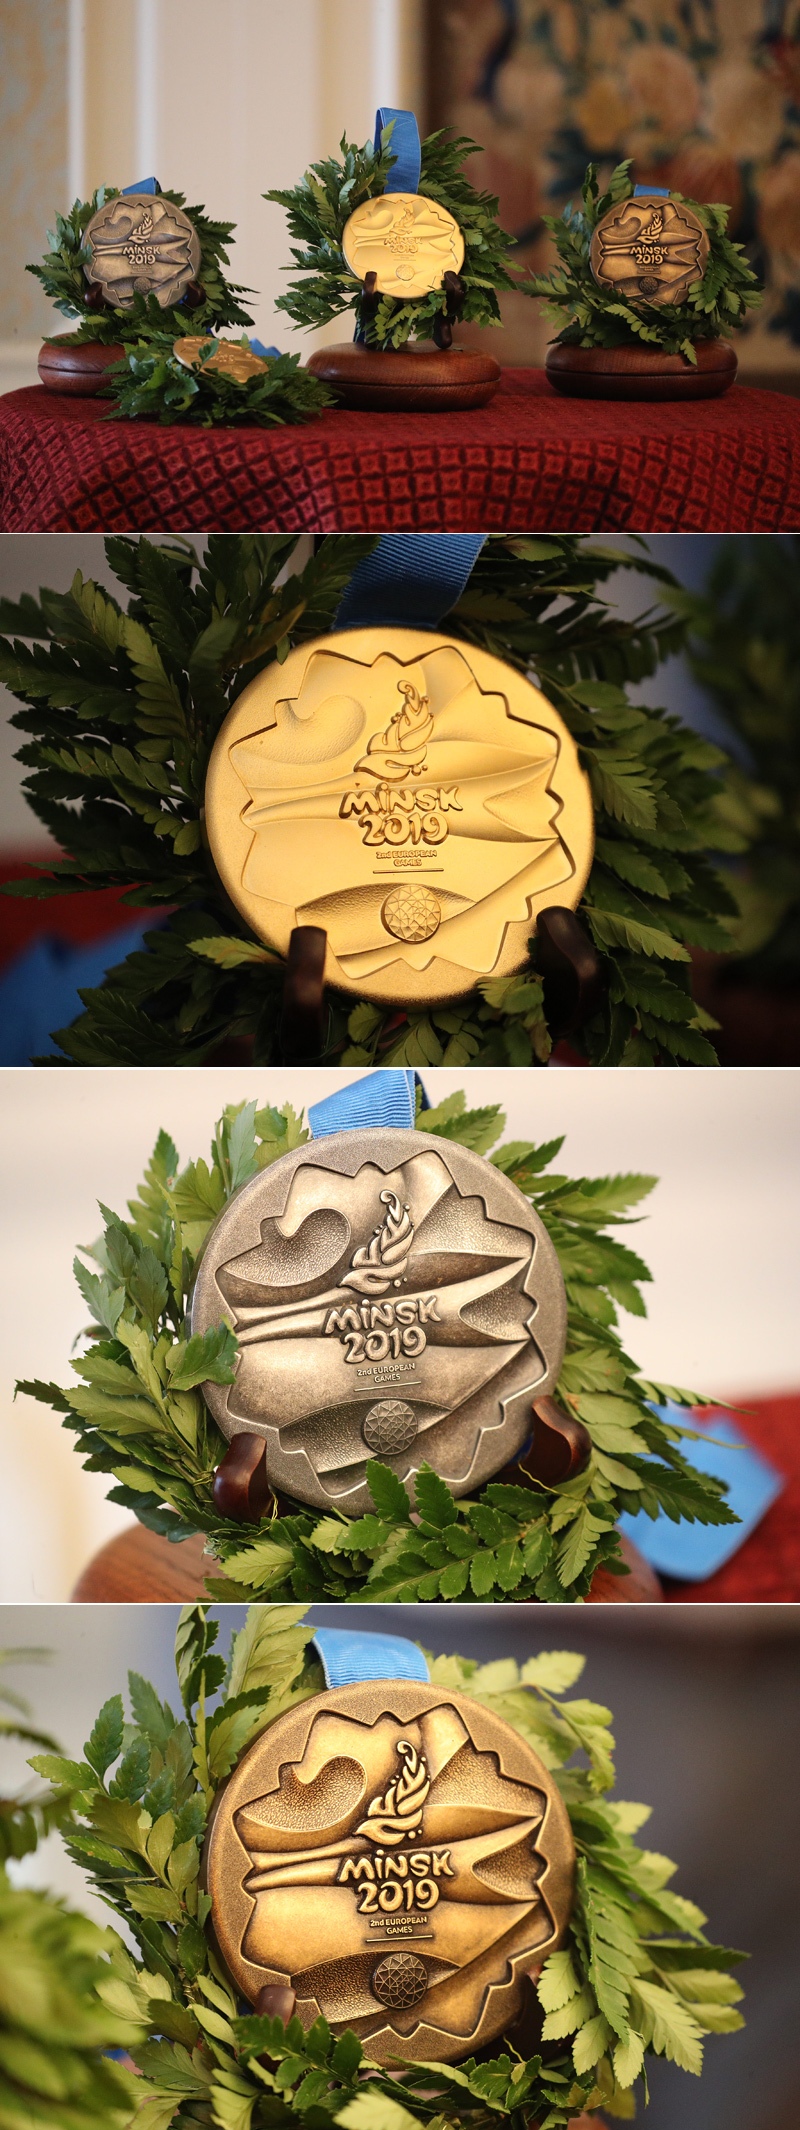 Belarus unveils medals for 2nd European Games